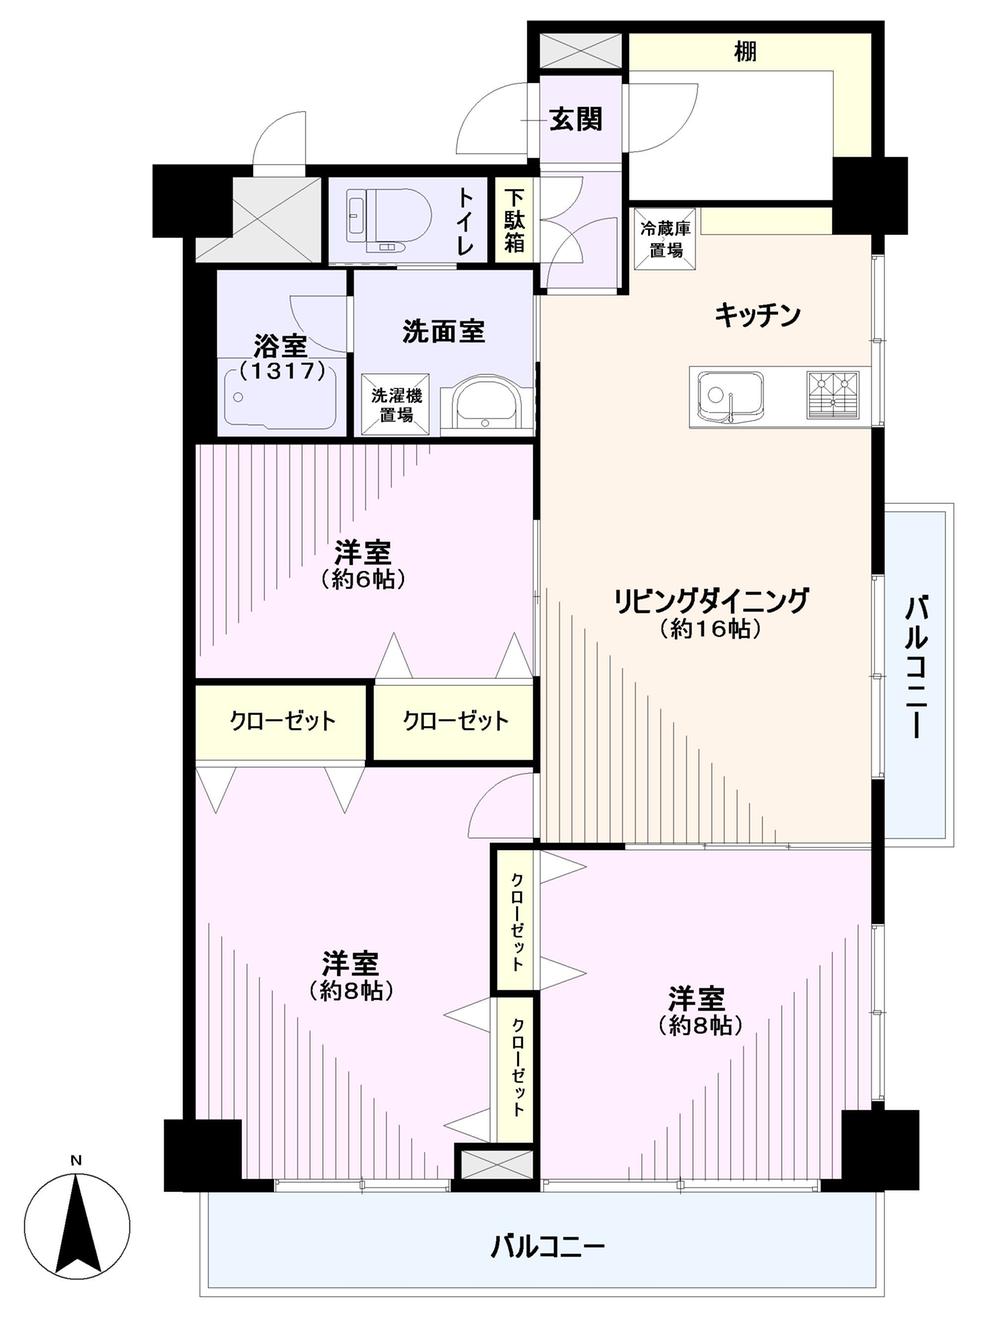 Floor plan. 3LDK + S (storeroom), Price 32,800,000 yen, Occupied area 83.16 sq m , Balcony area 12.28 sq m